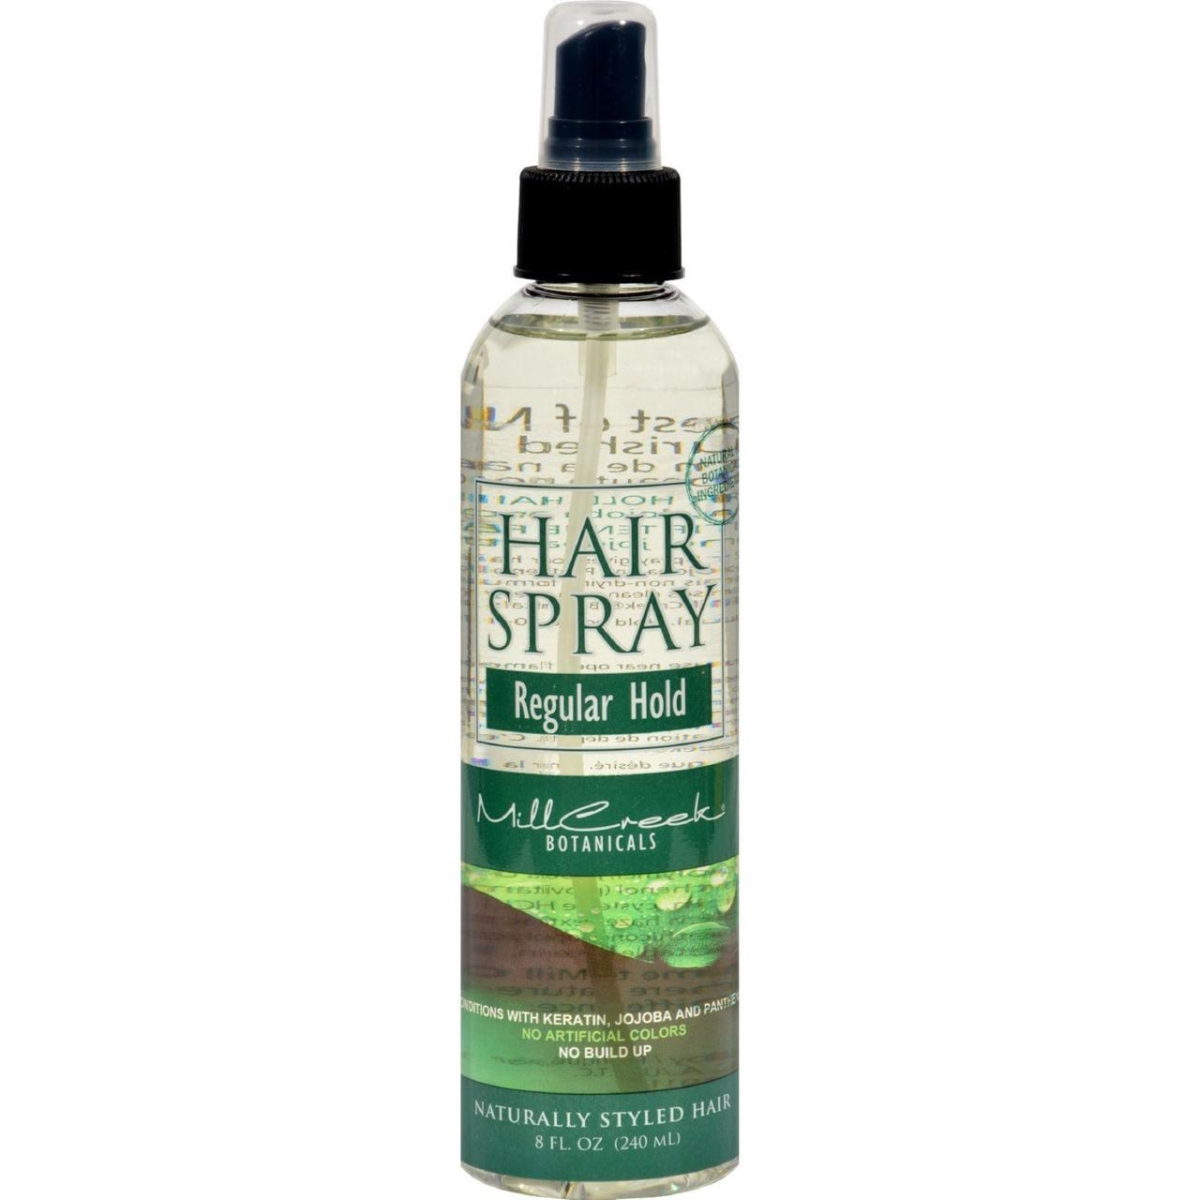 Hg0925735 8 Fl Oz Hair Spray Regular Hold